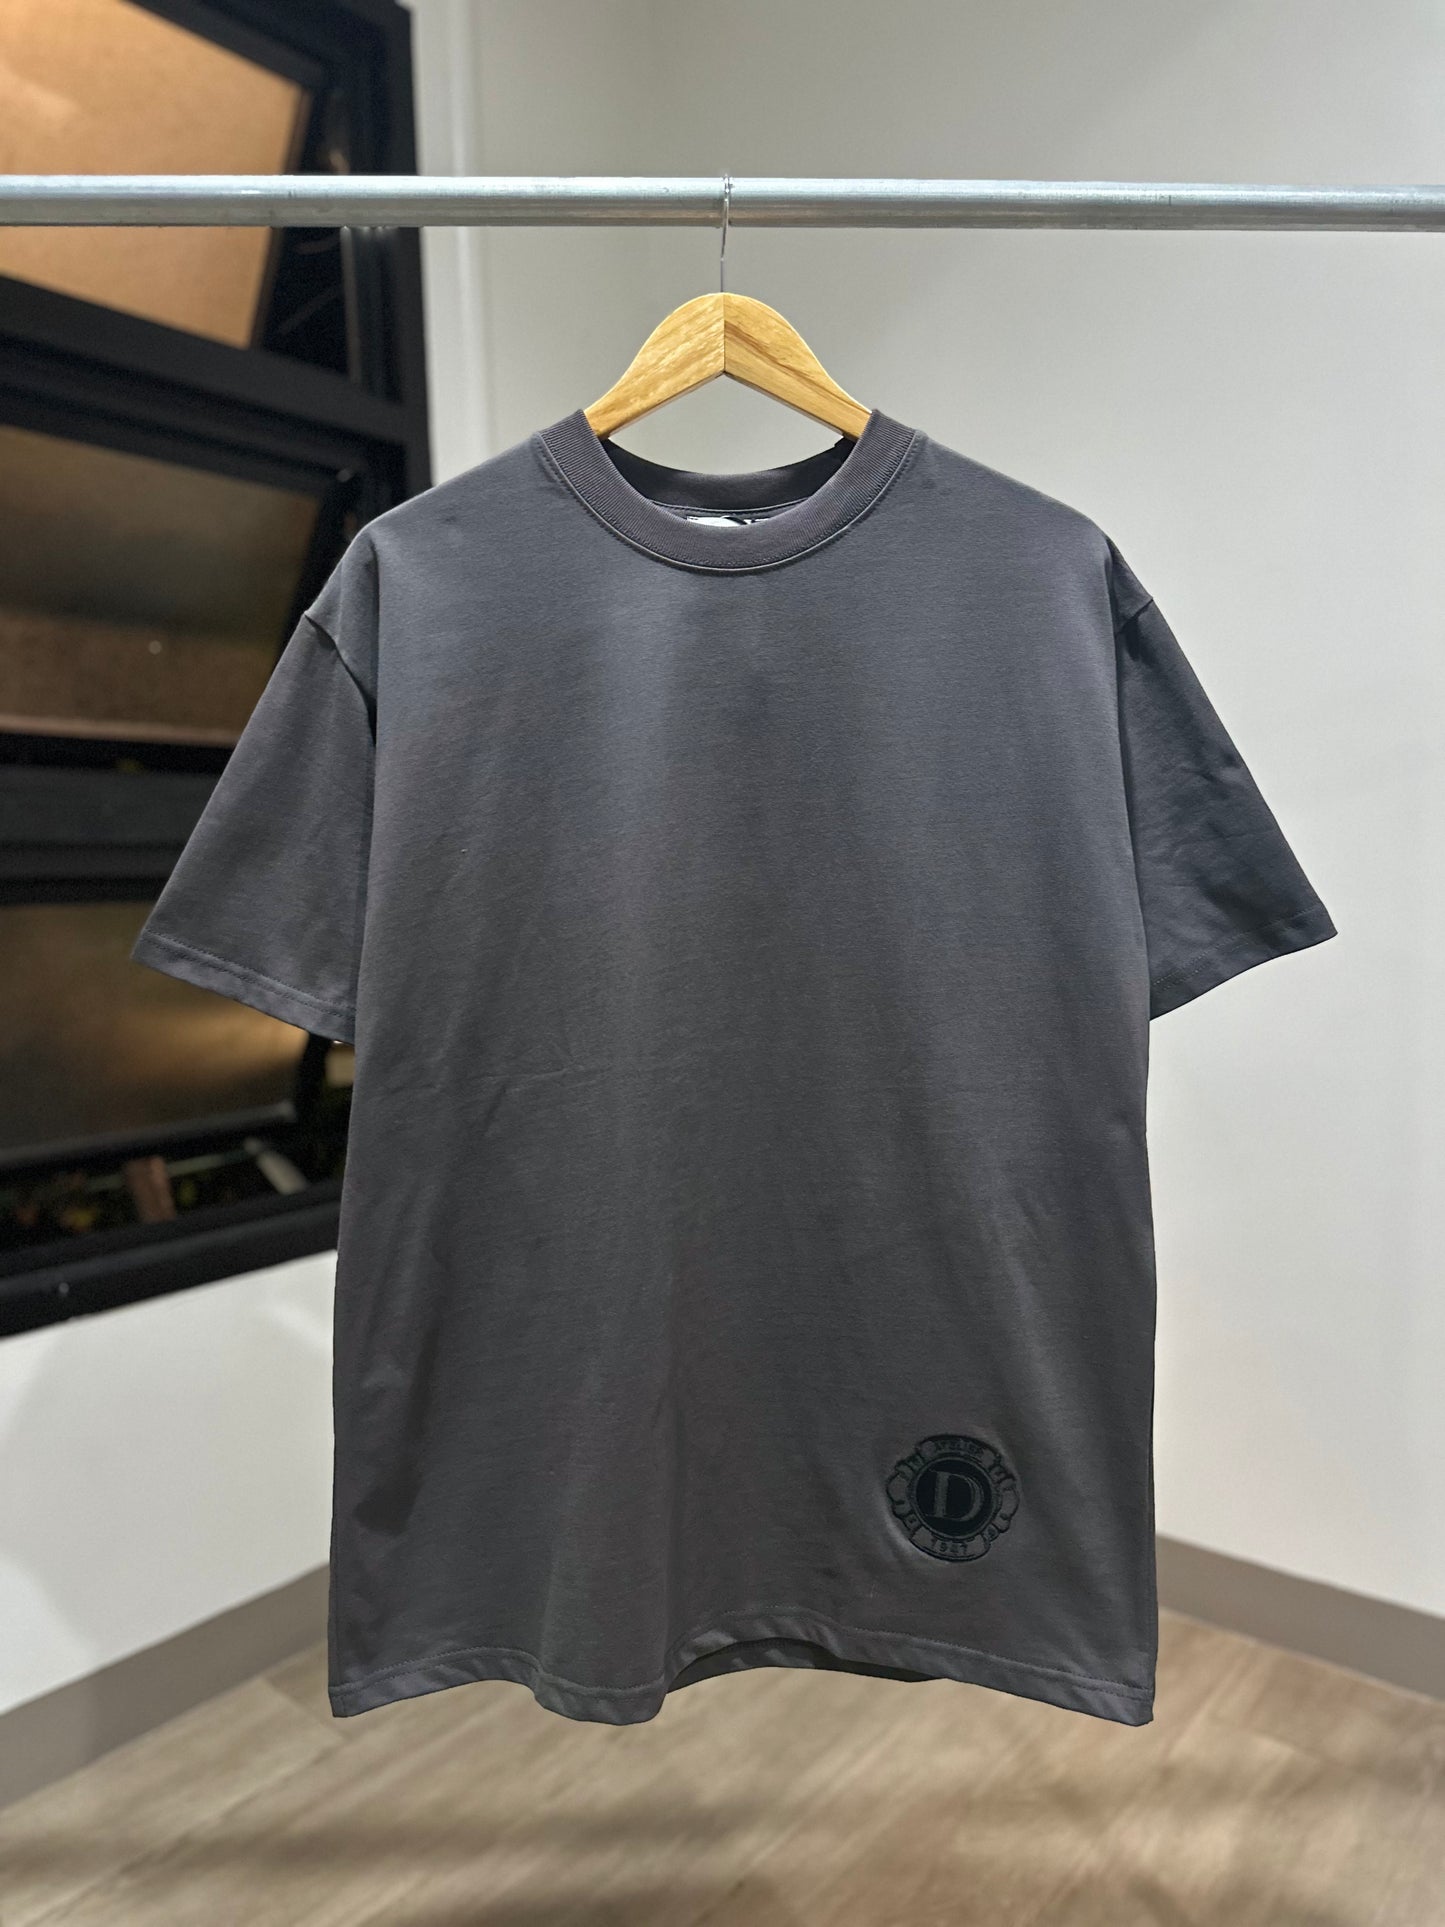 Christian Dior T-Shirt (Gray)